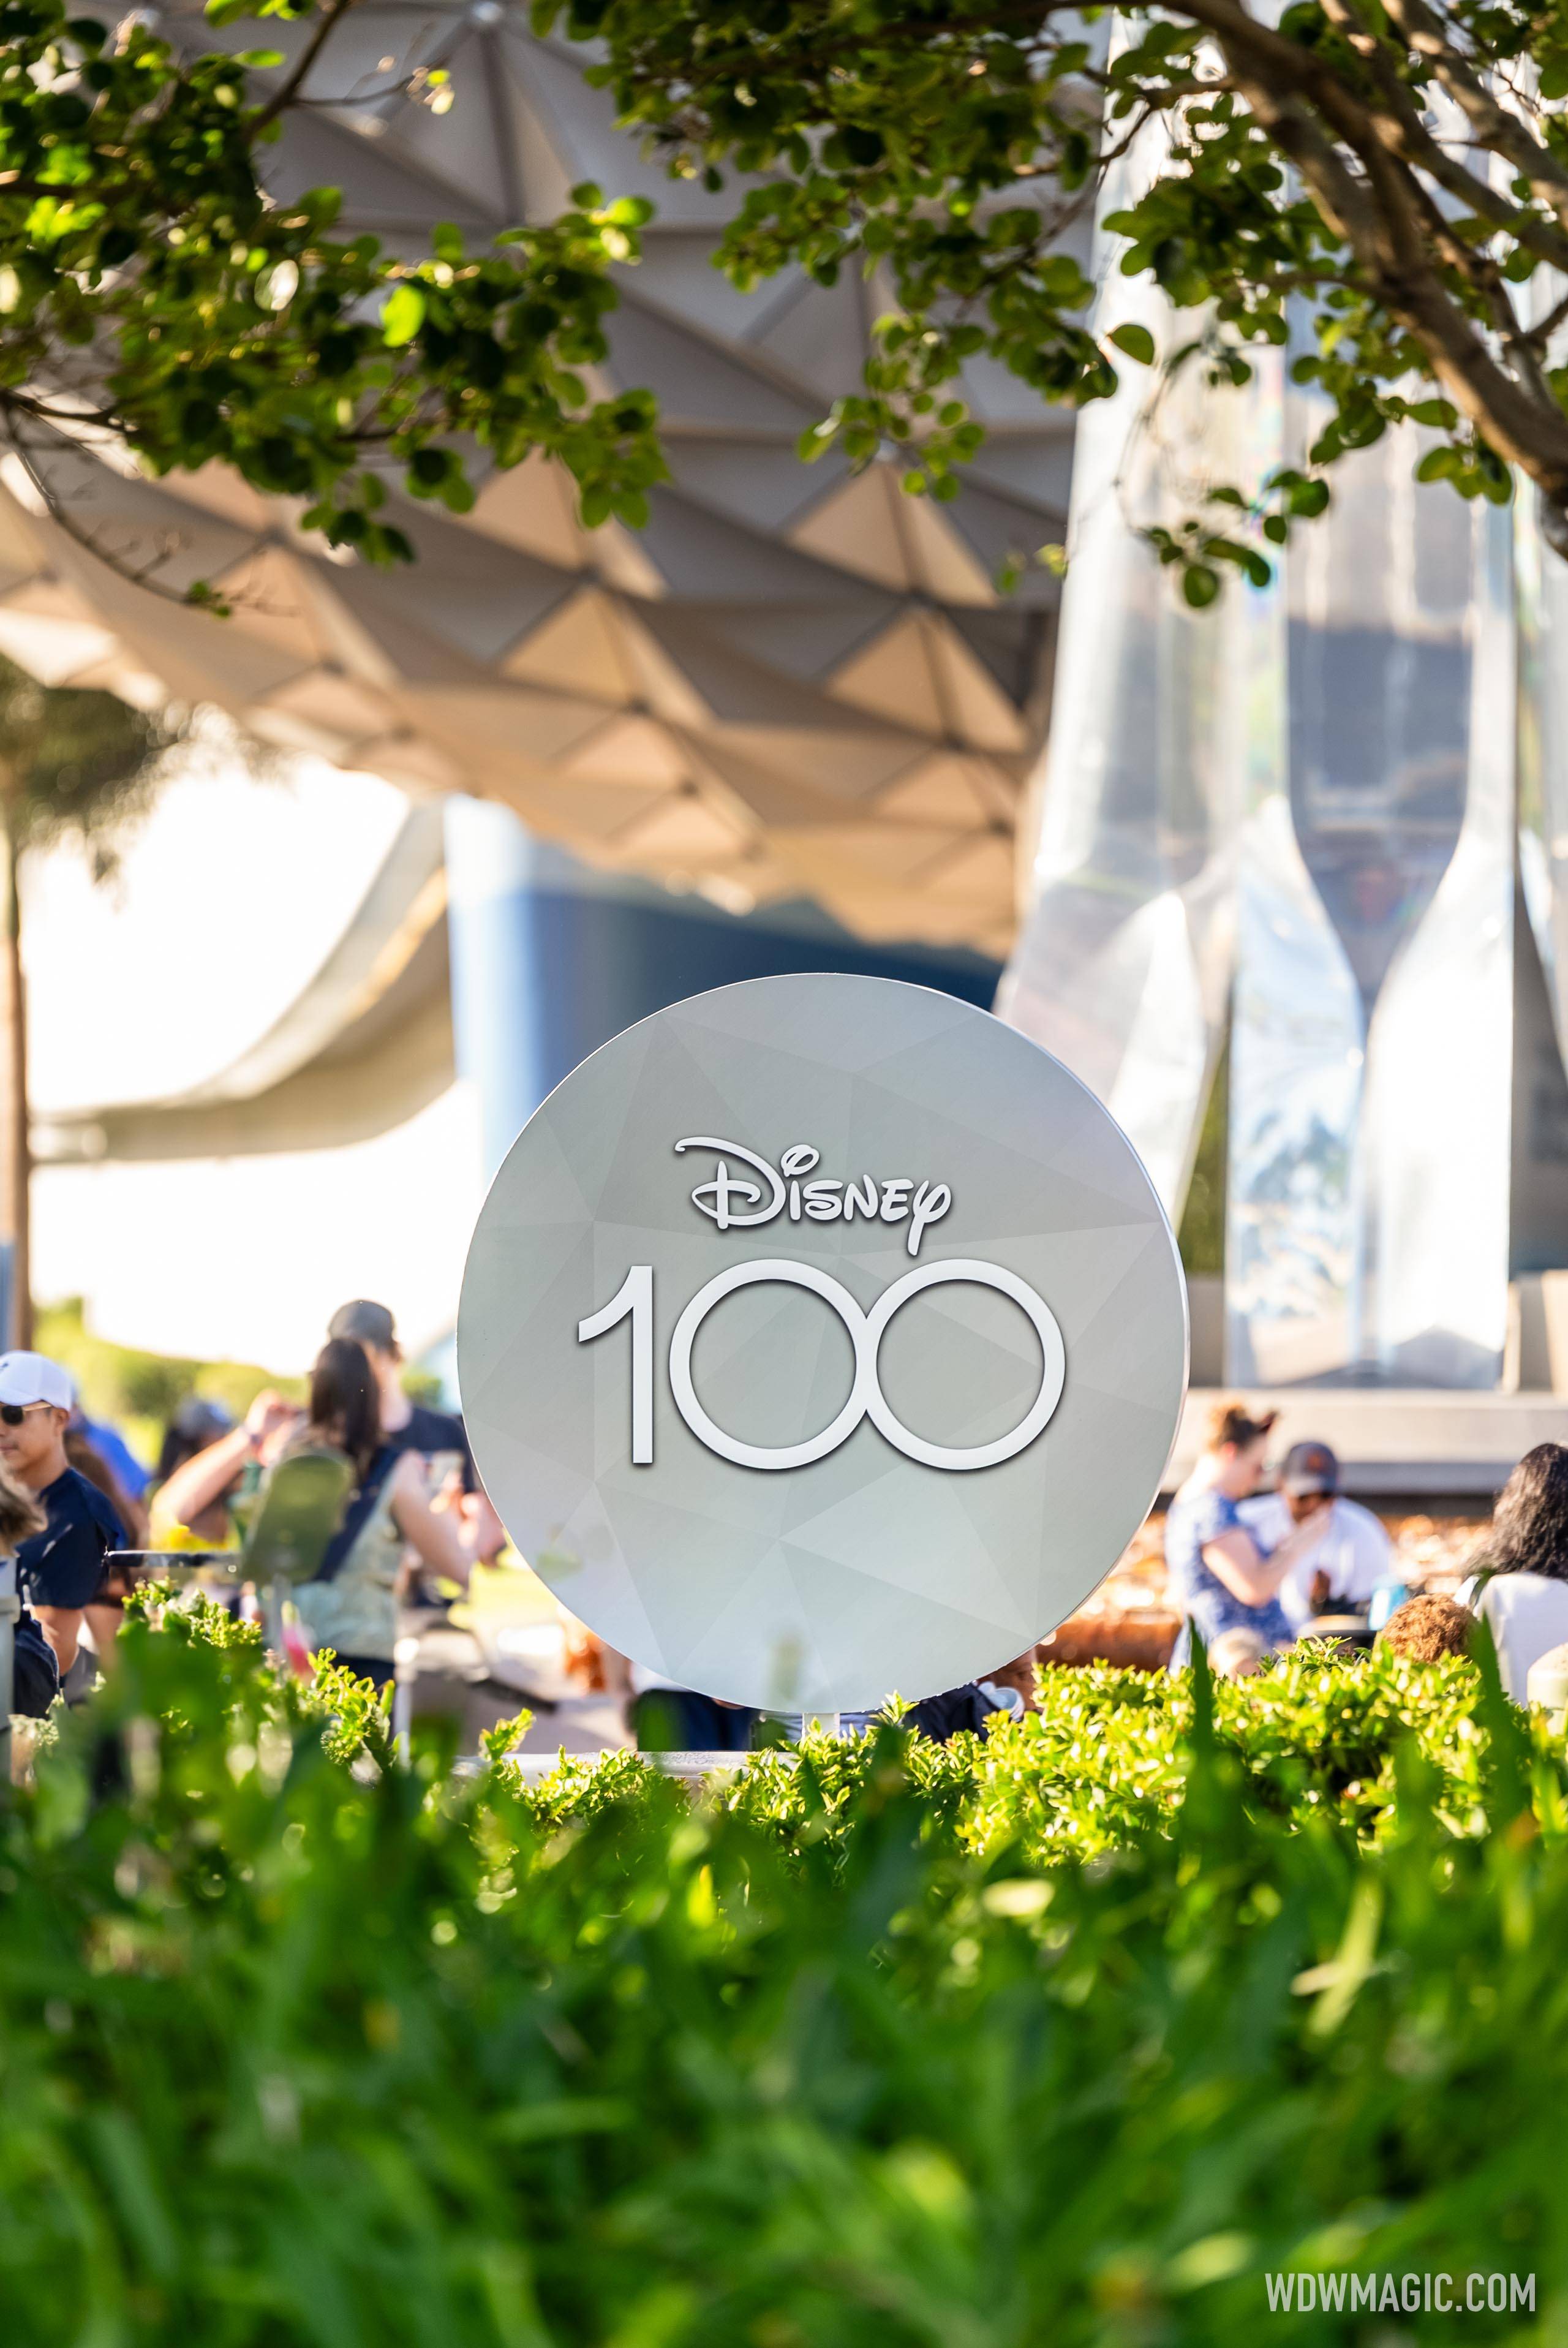 Disney100 decor at EPCOT